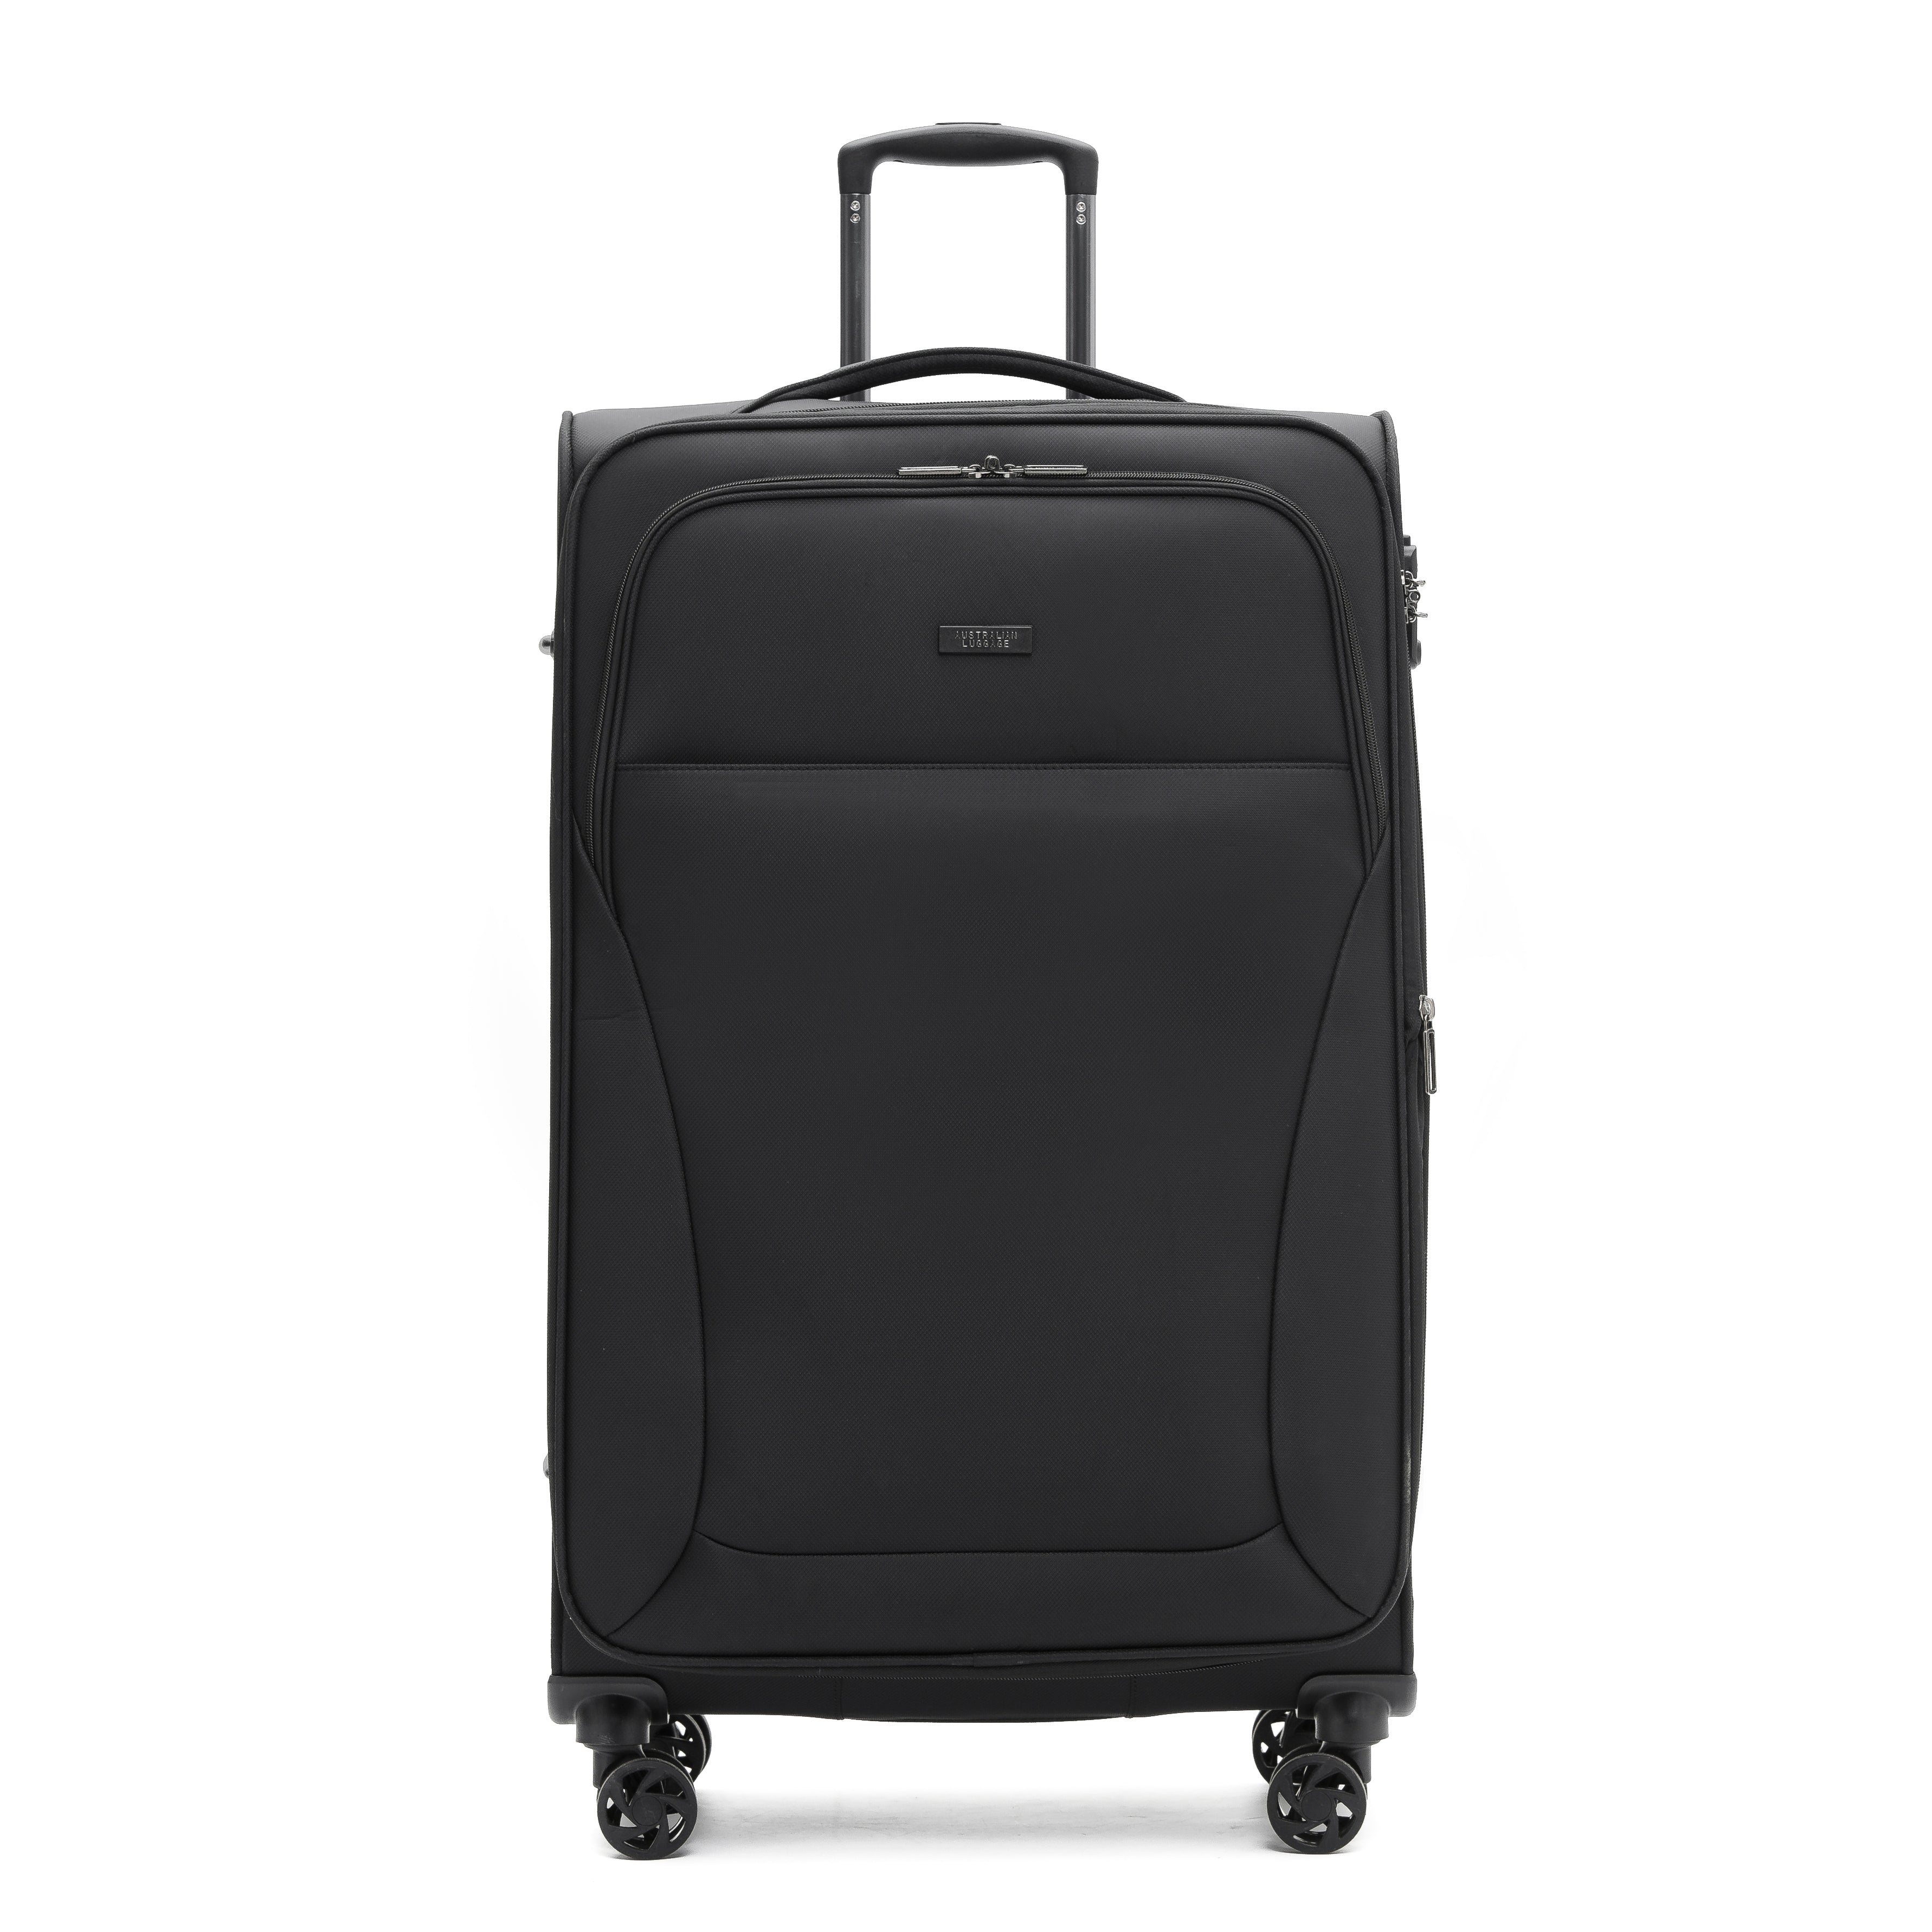 Aus Luggage - WINGS Set of 3 Suitcases - Black-4